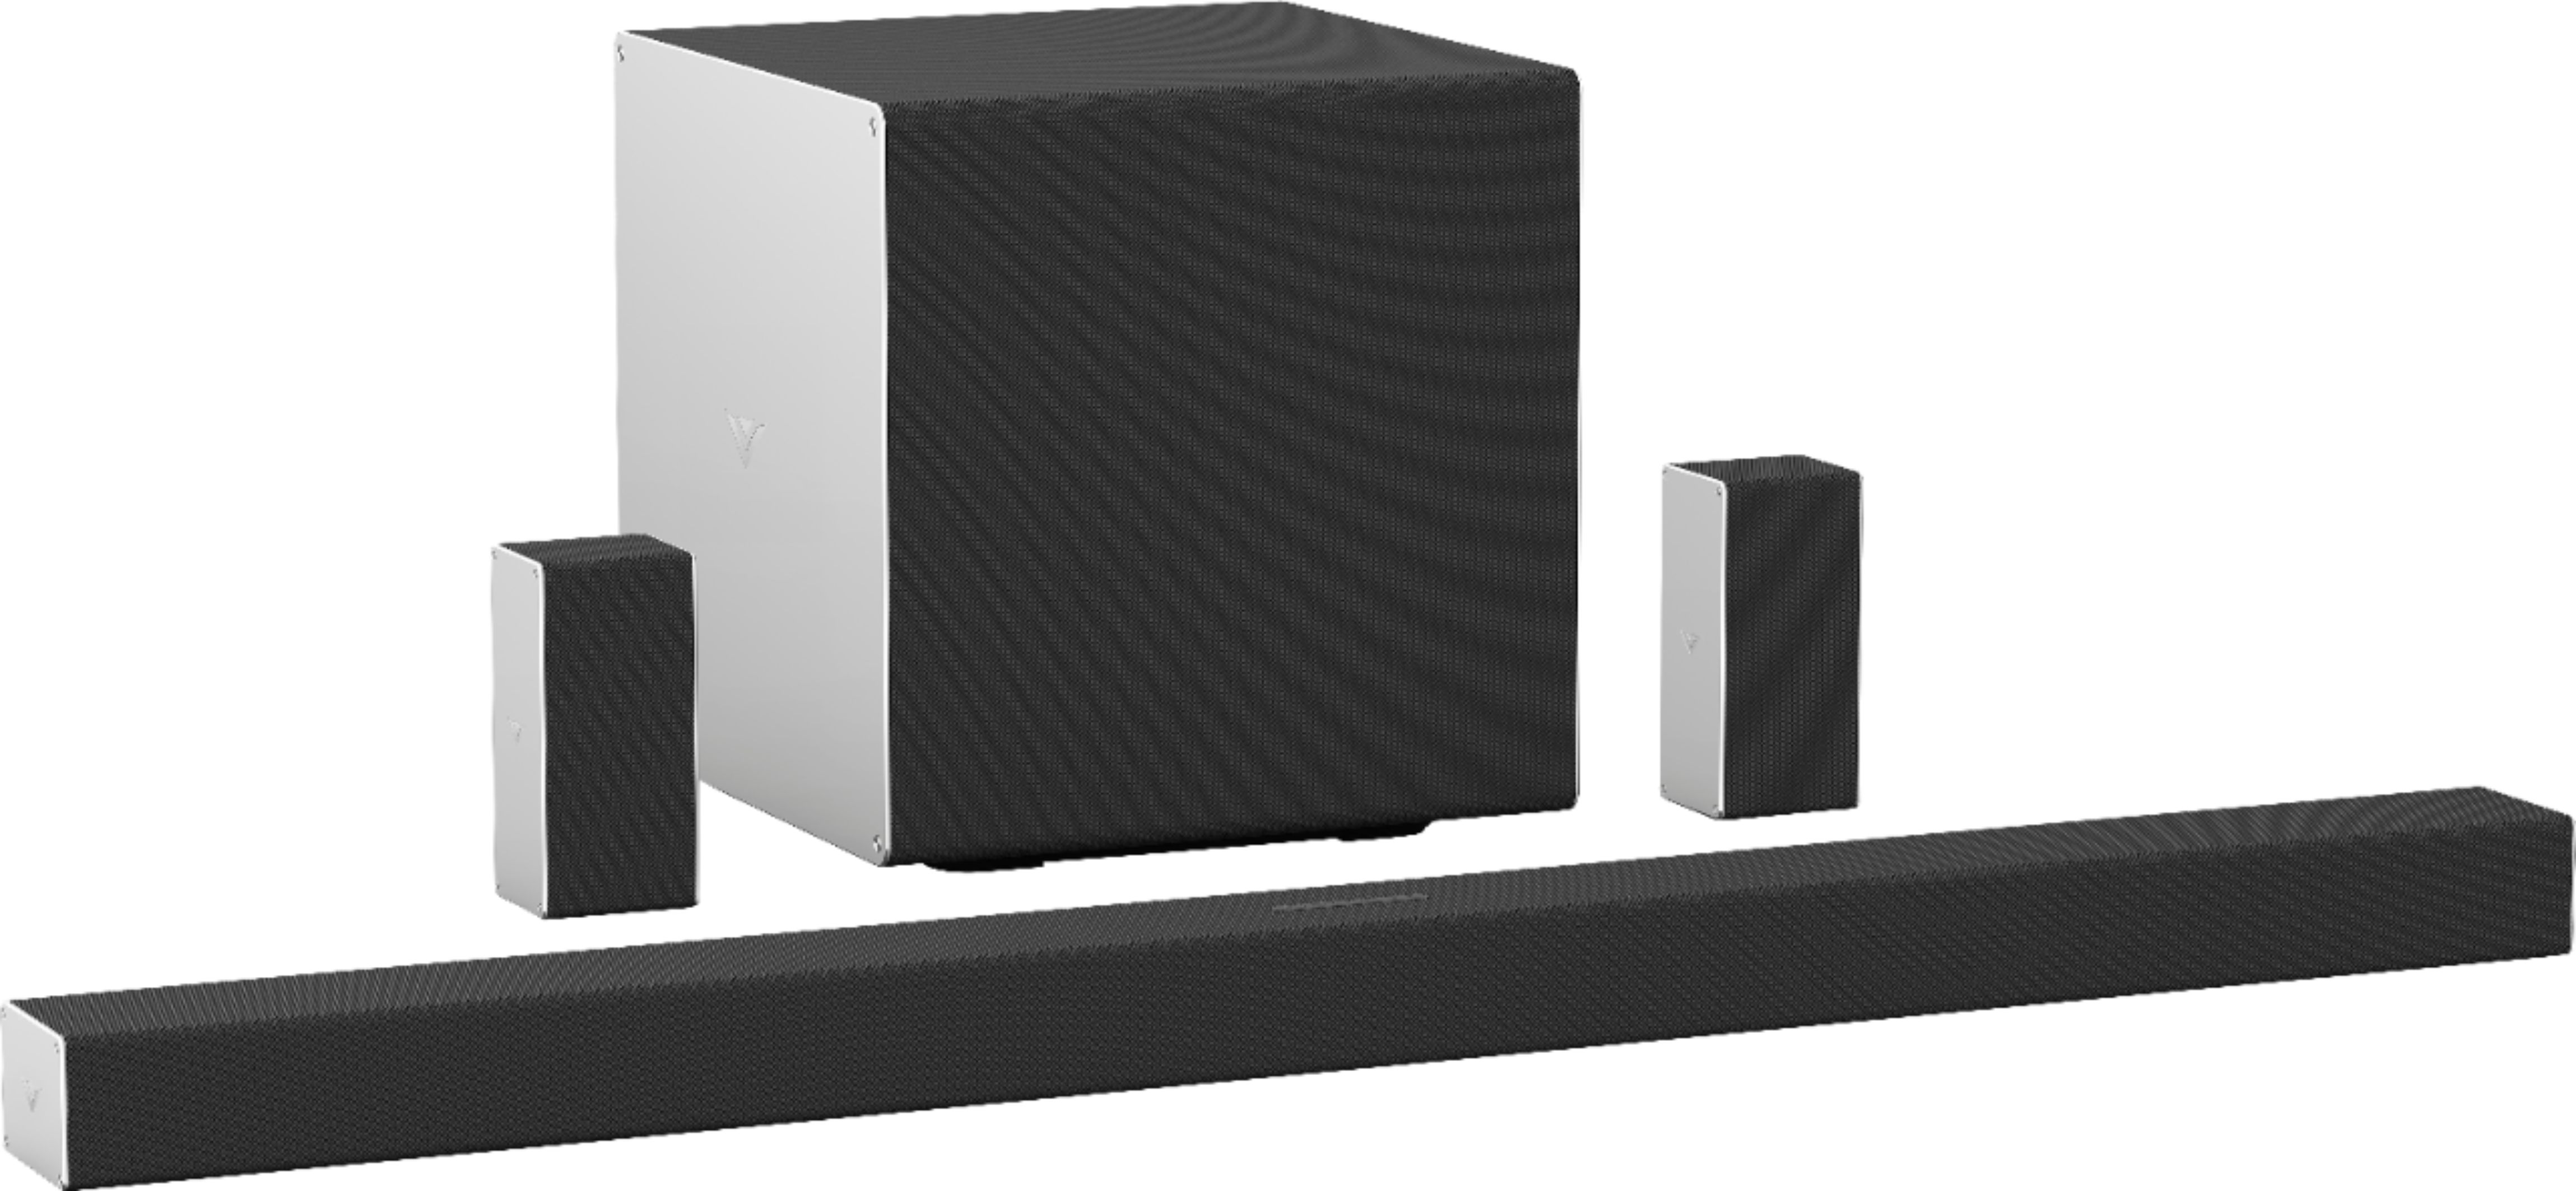 VIZIO Soundbar Subwoofer, Dolby Atmos and Voice Assistant Black SB46514-F6 - Best Buy